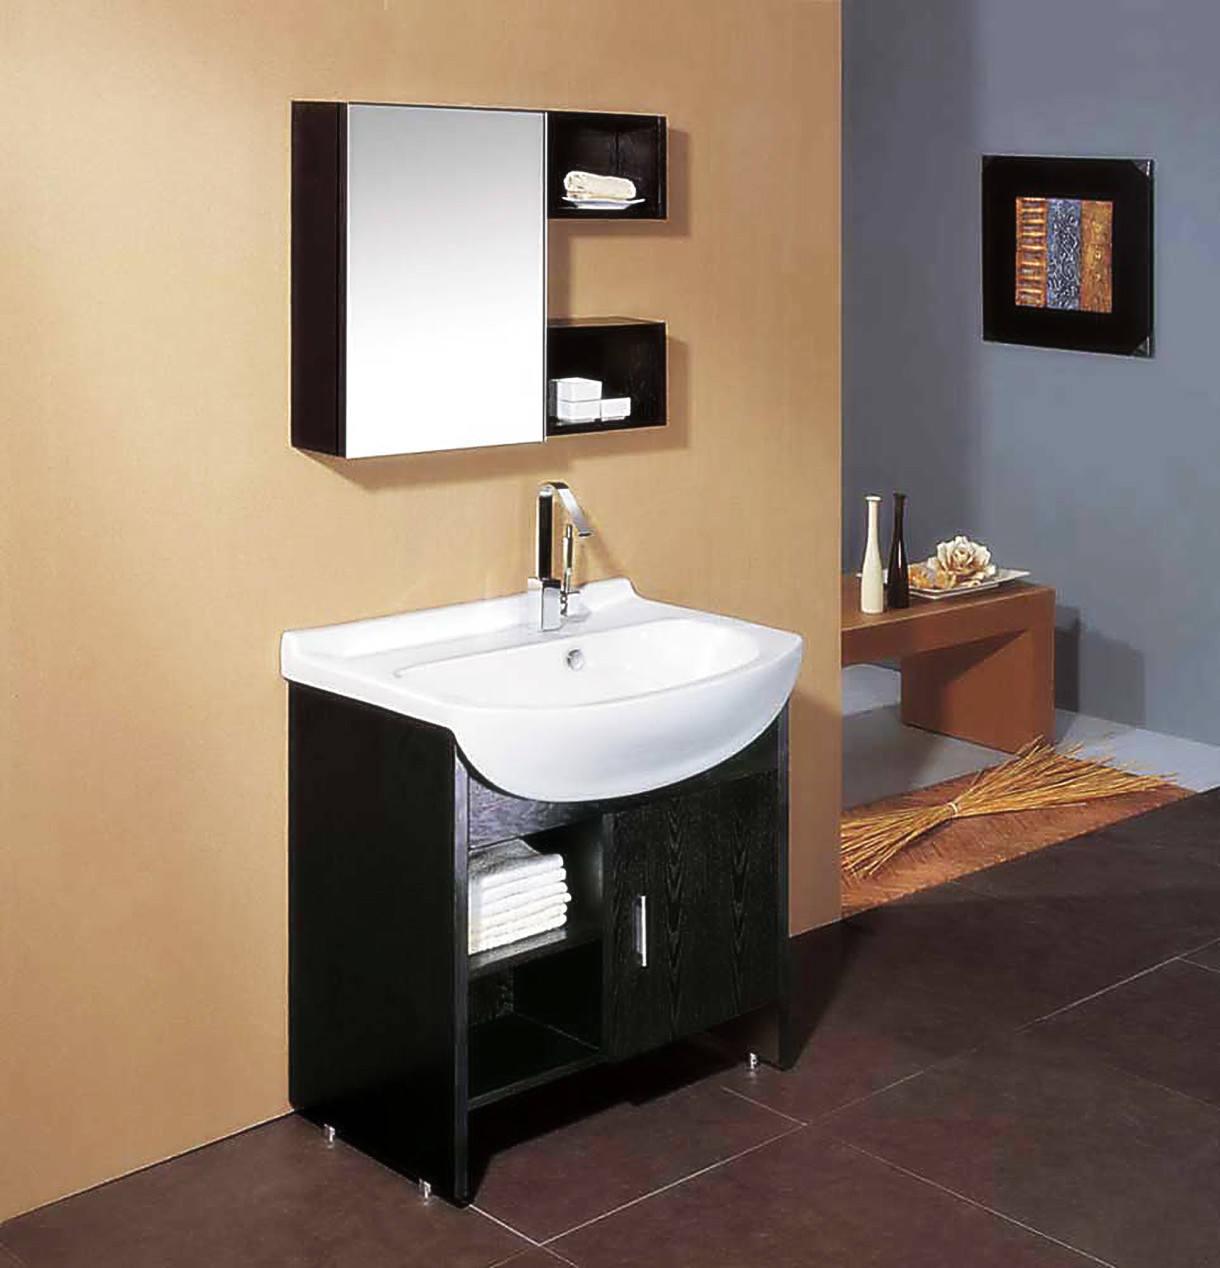 Ikea White Bathroom Cabinet
 Ikea Bath Cabinet Invades Every Bathroom with Dignity